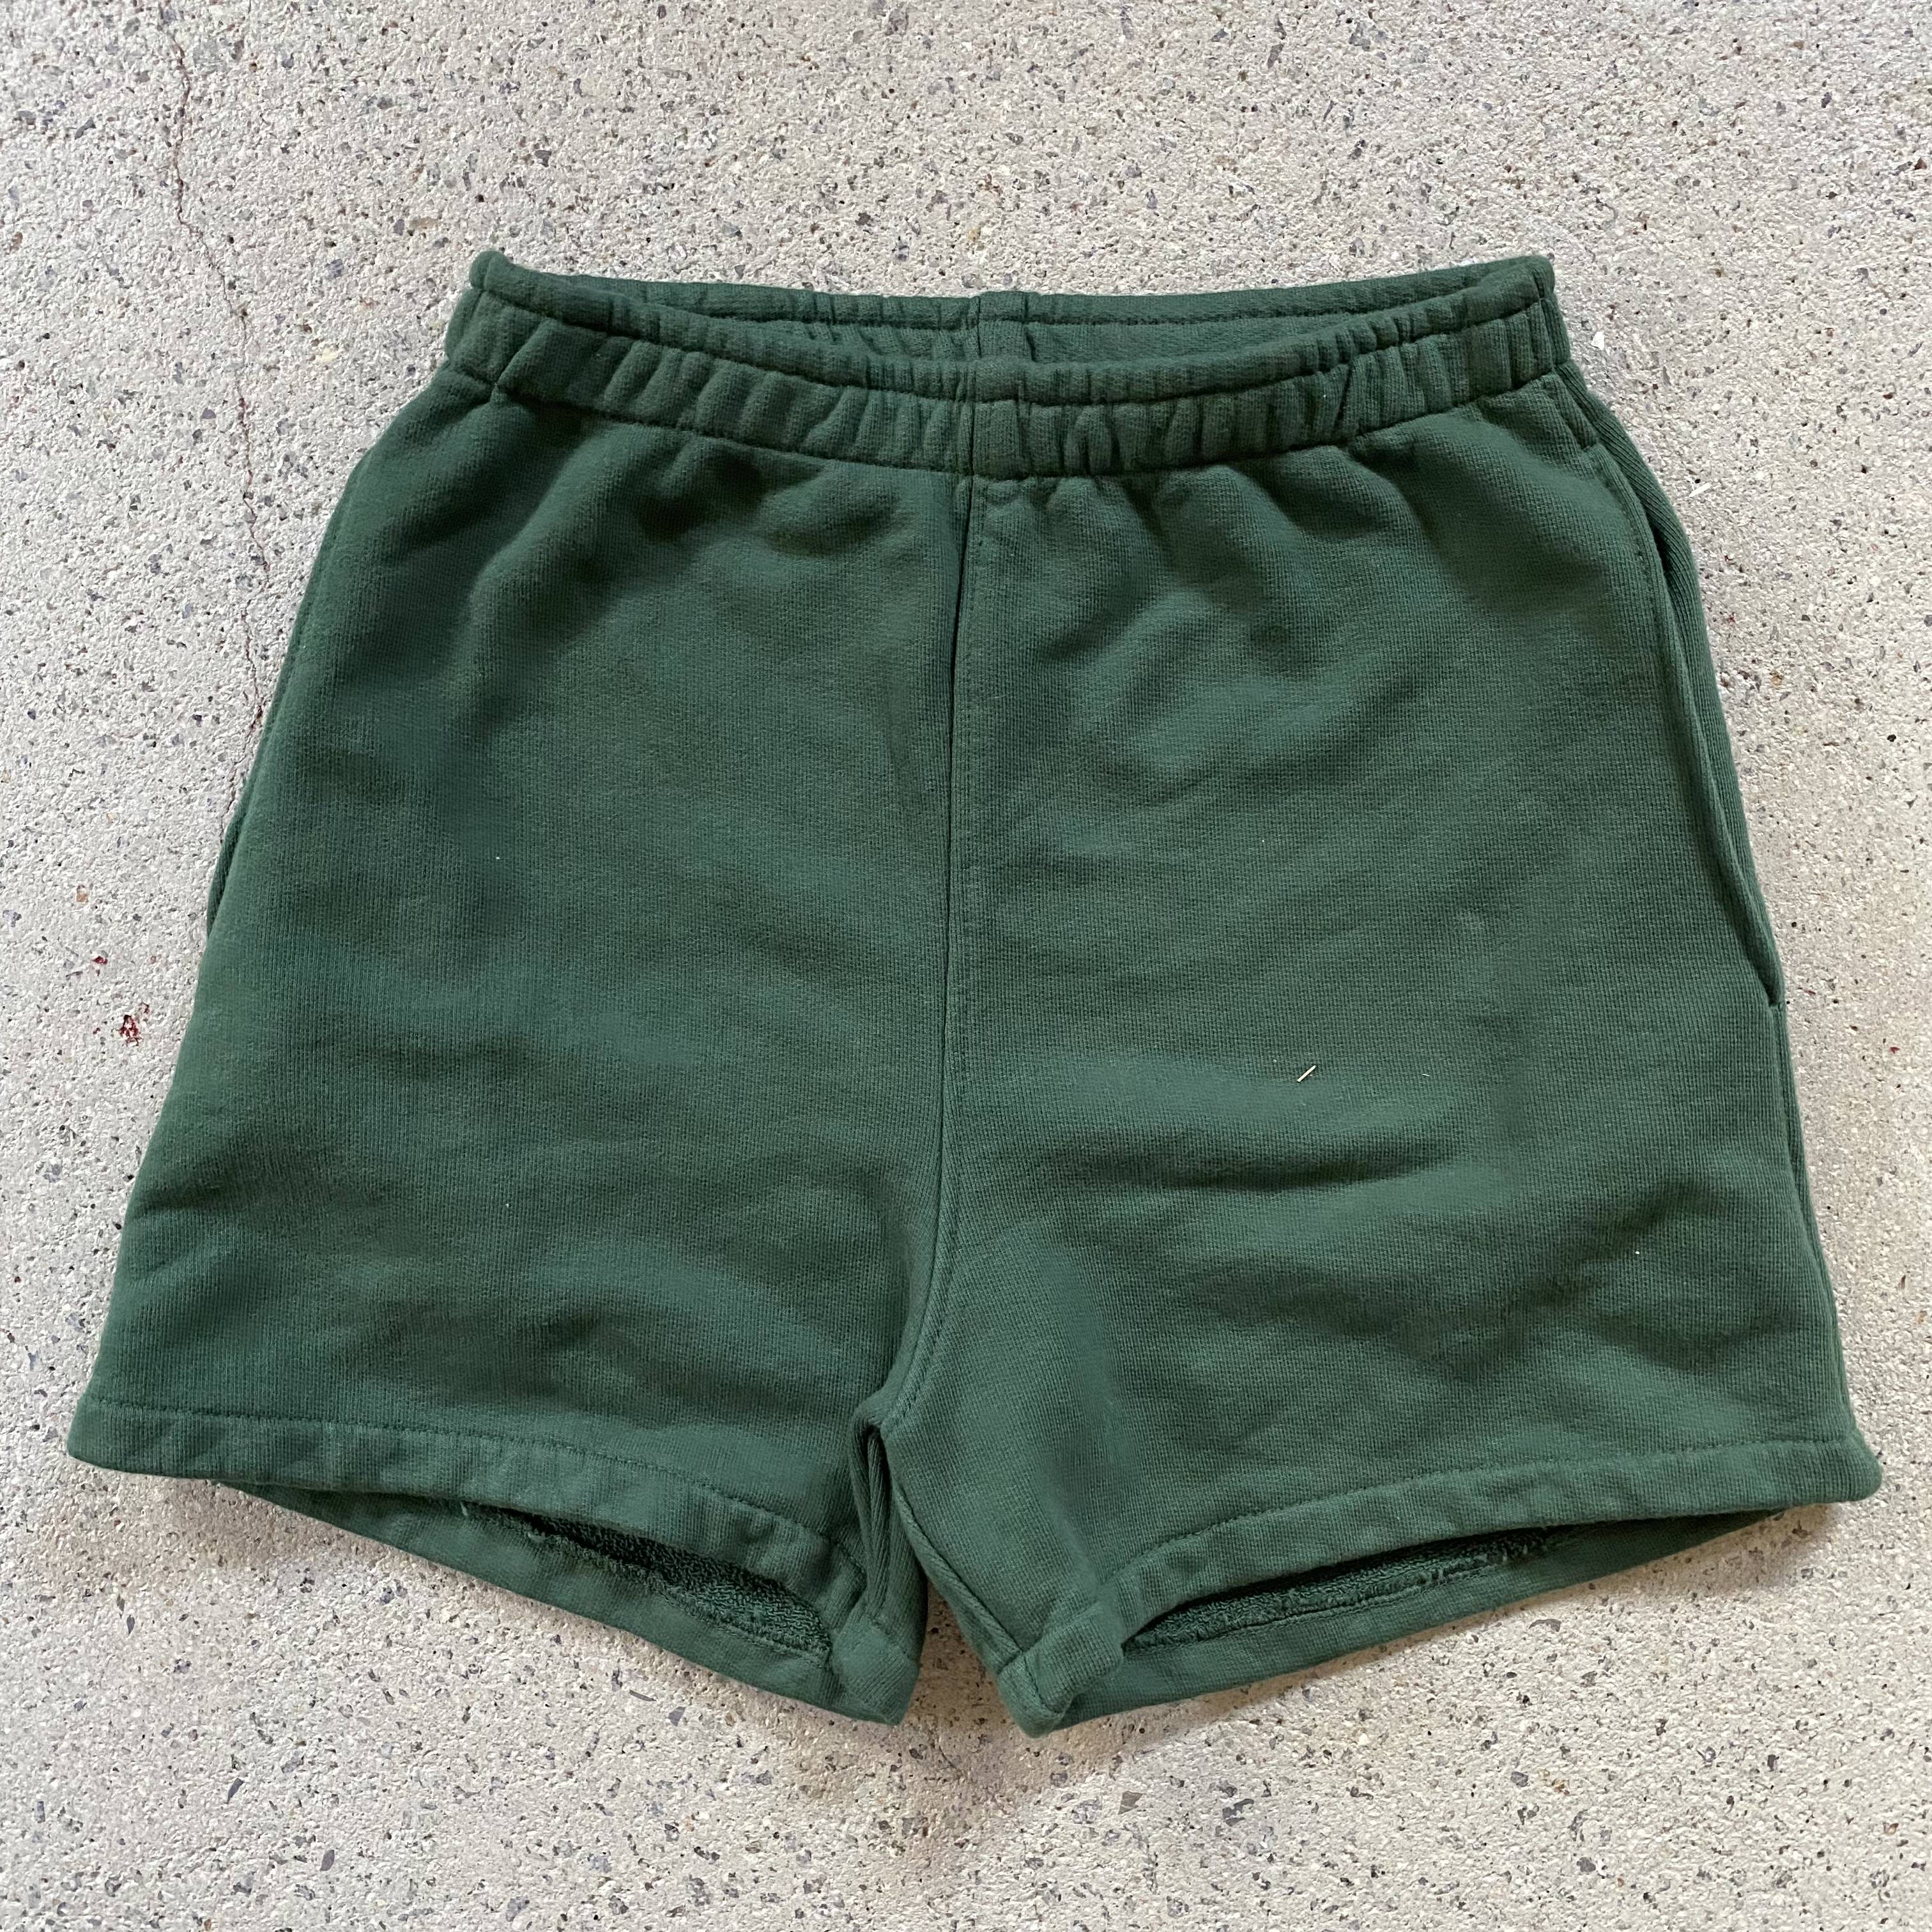 Austr. BH shorts,, OD green, used